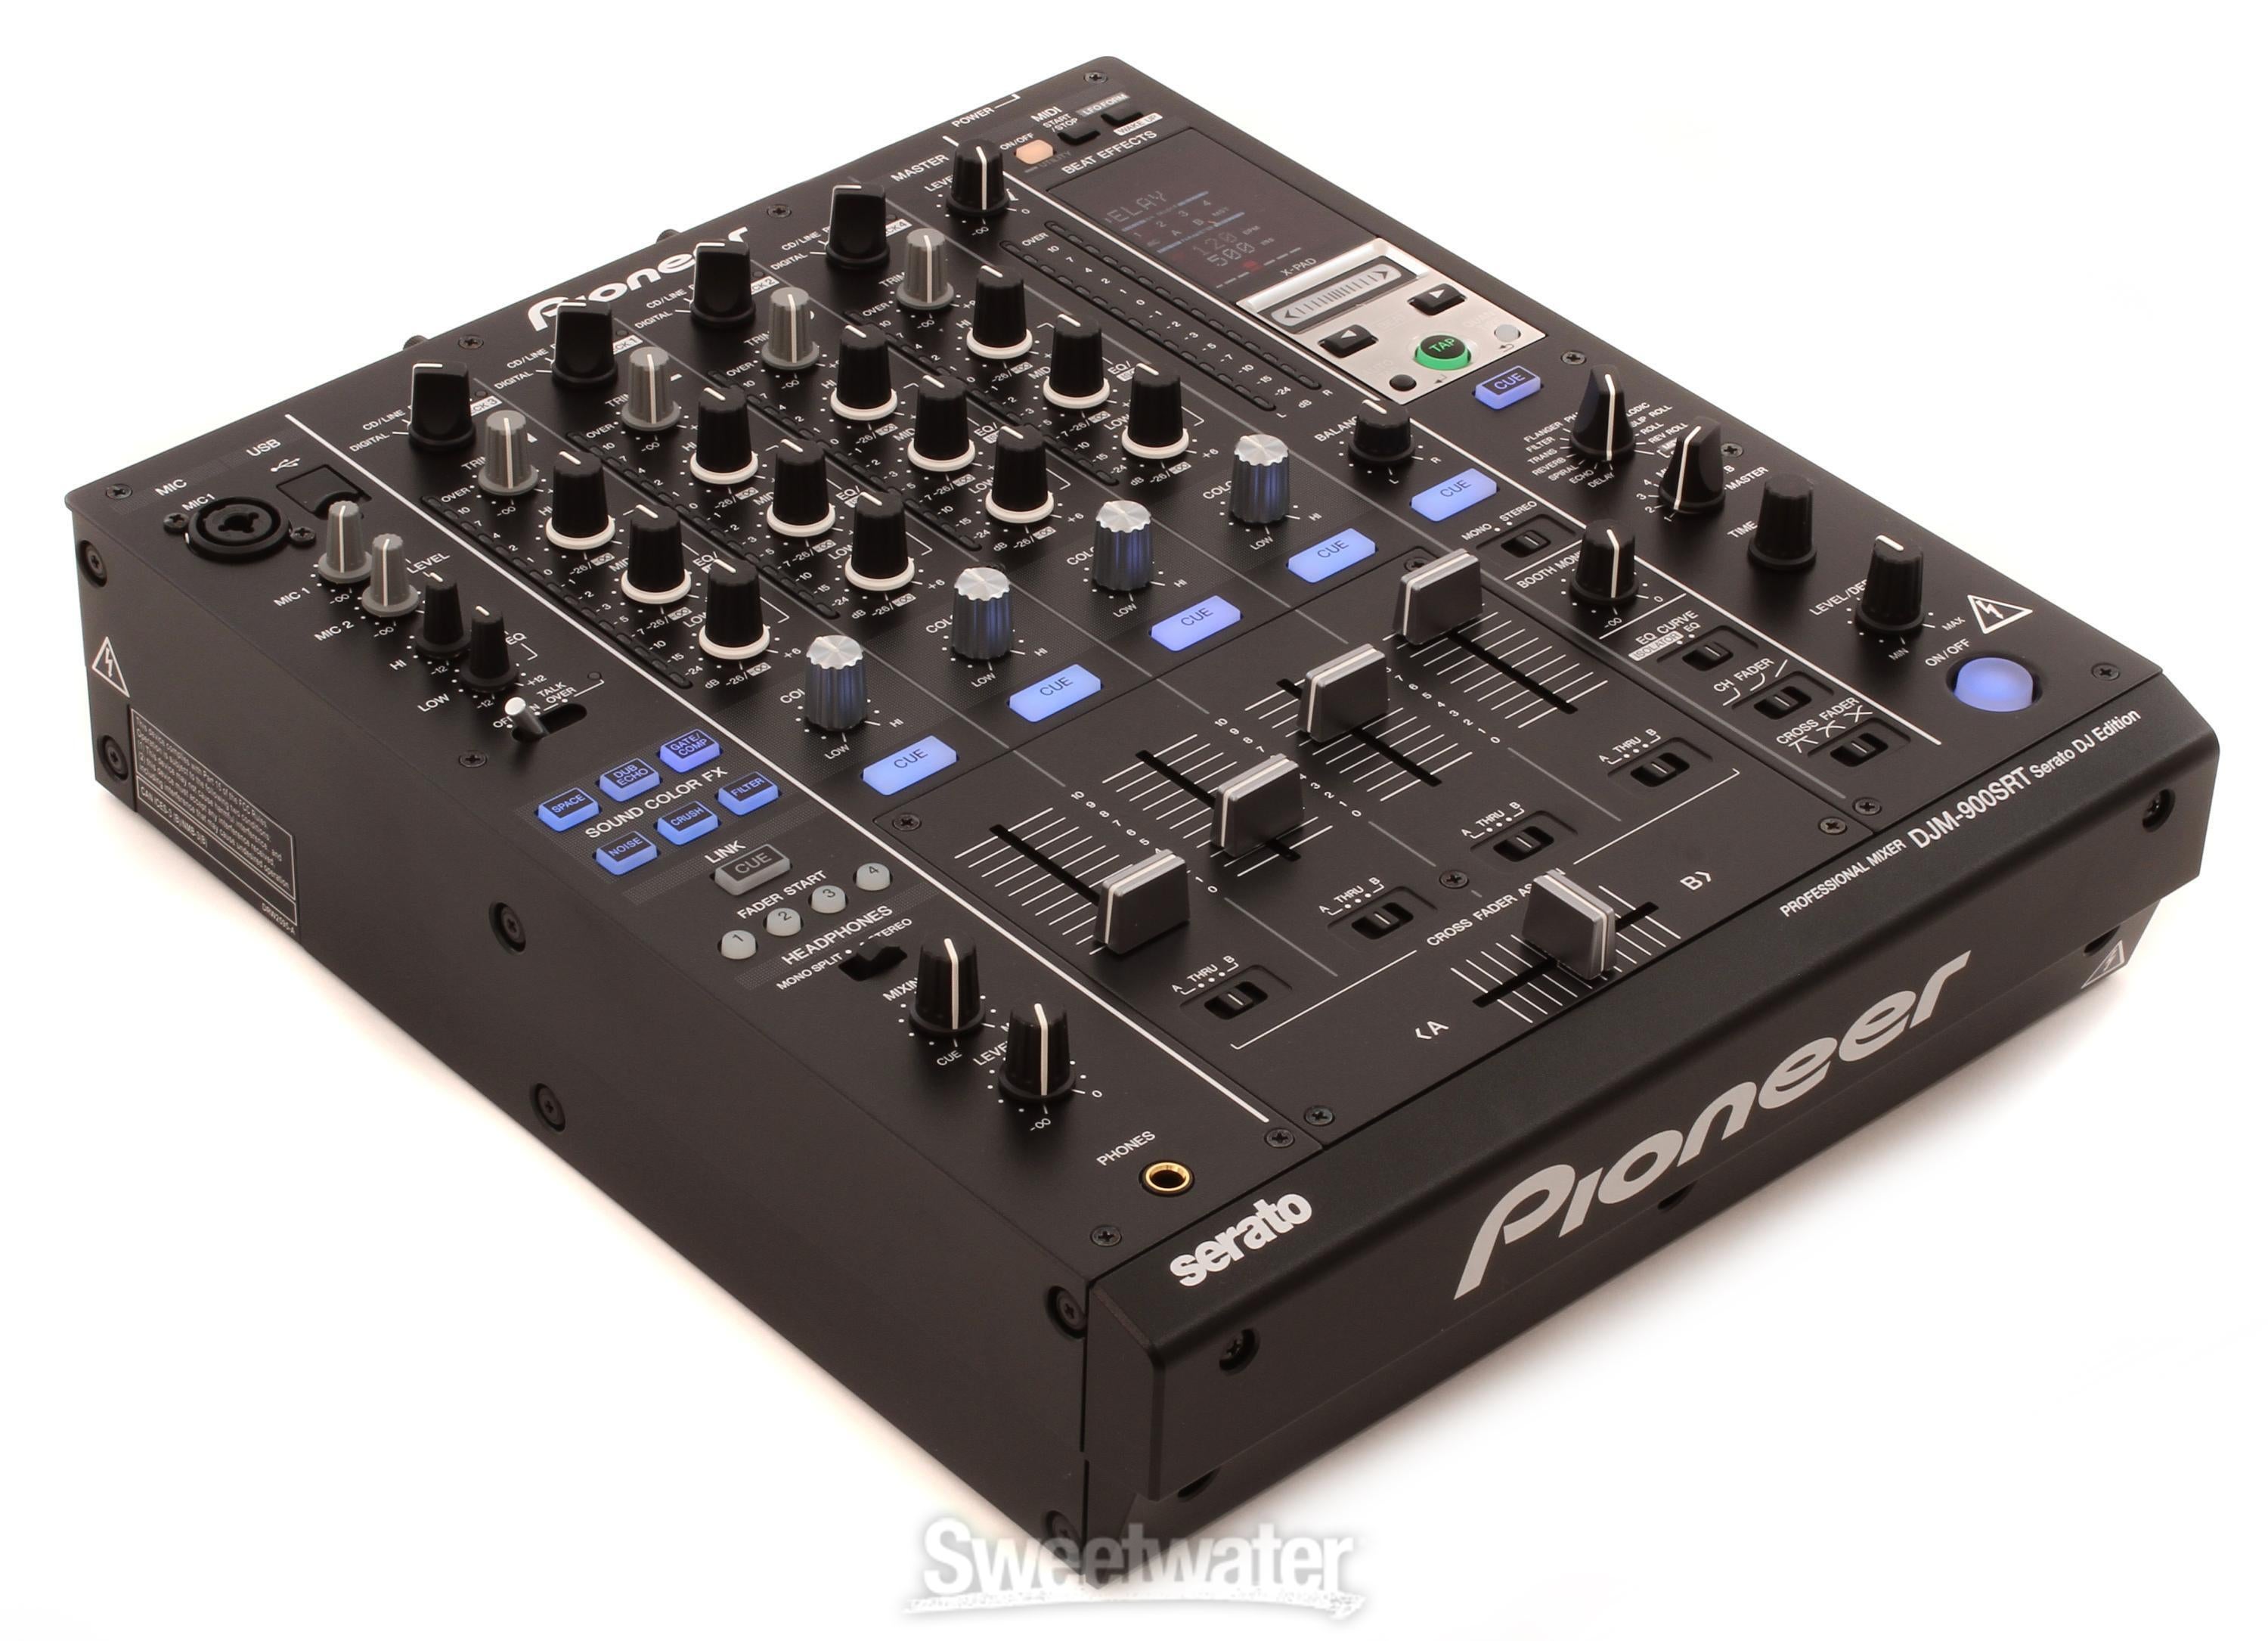 Pioneer DJ DJM-900SRT Serato DJ Edition | Sweetwater